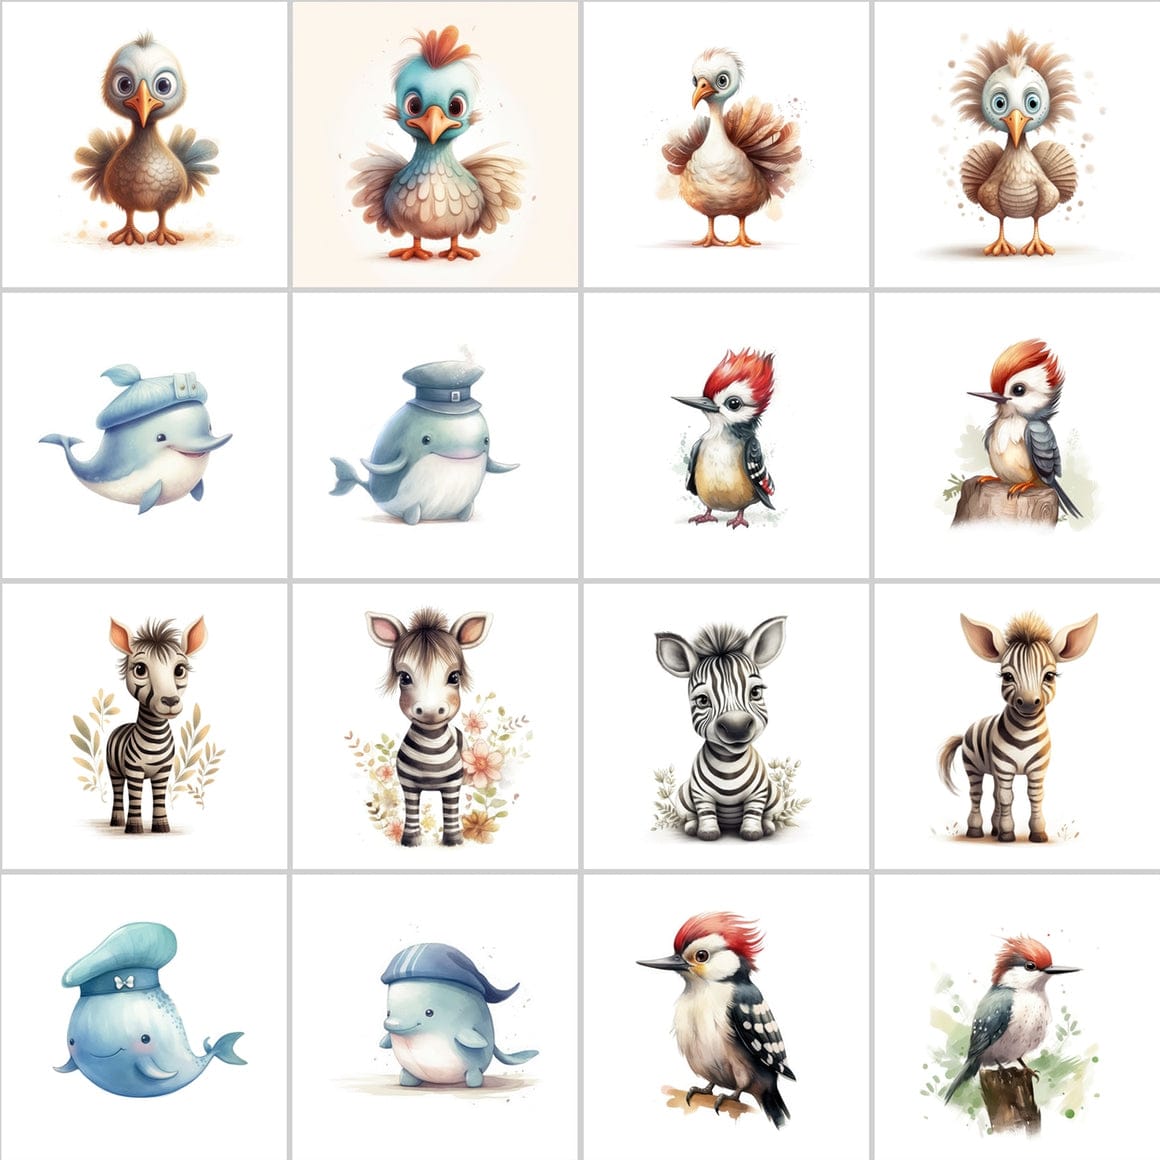 Transparent PNG Cute Animal Illustrations with Commercial License - 300 Unique Images Digital Download Sumobundle